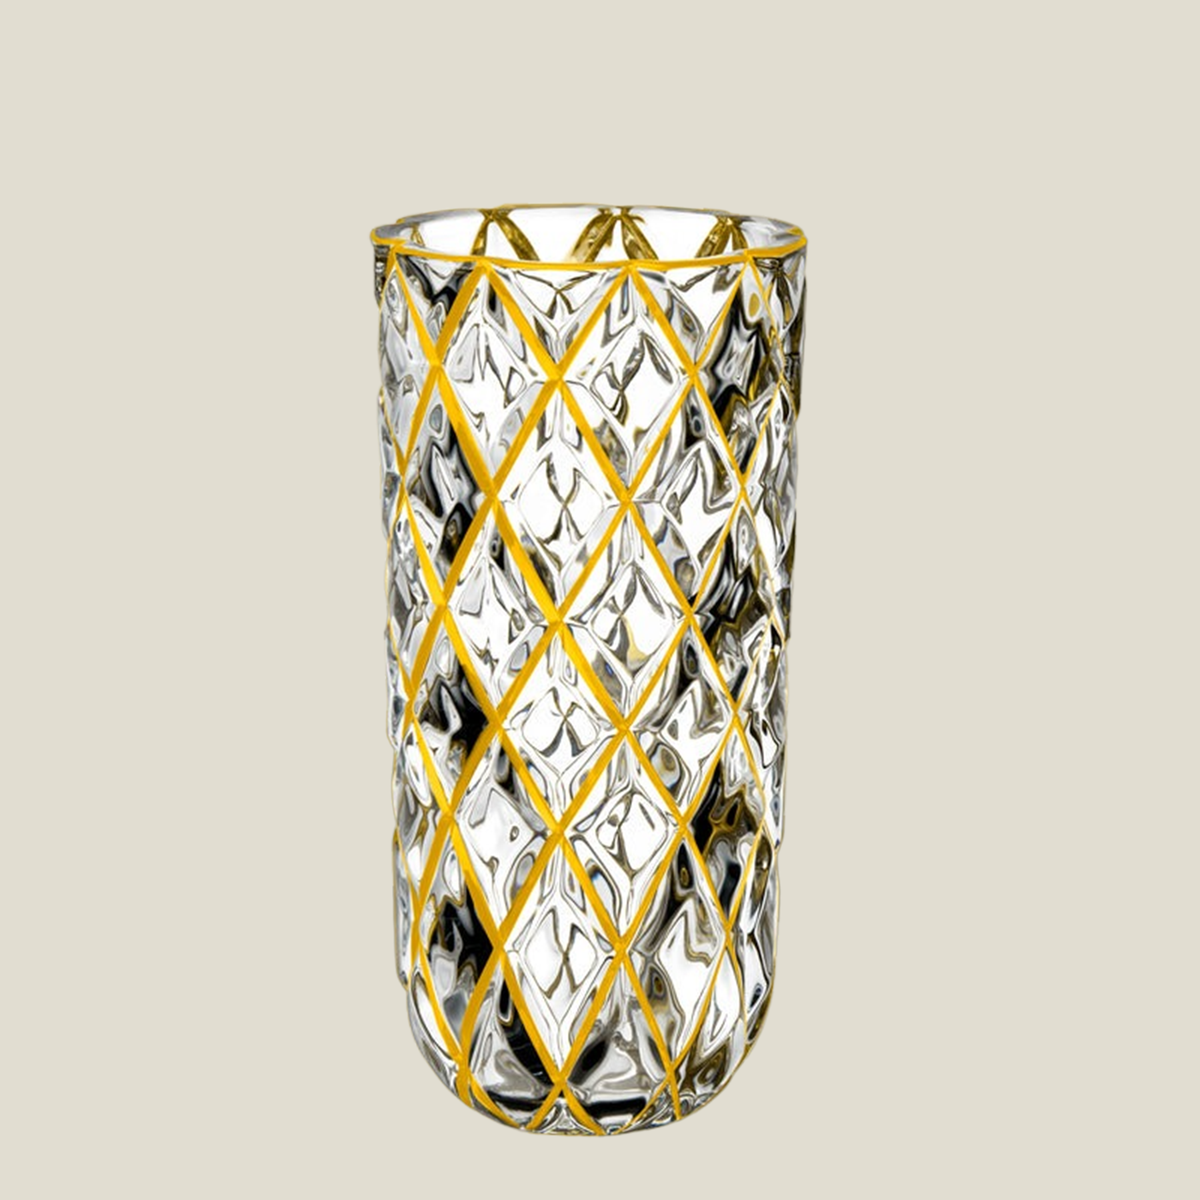 Rhombus design vase with golden lining